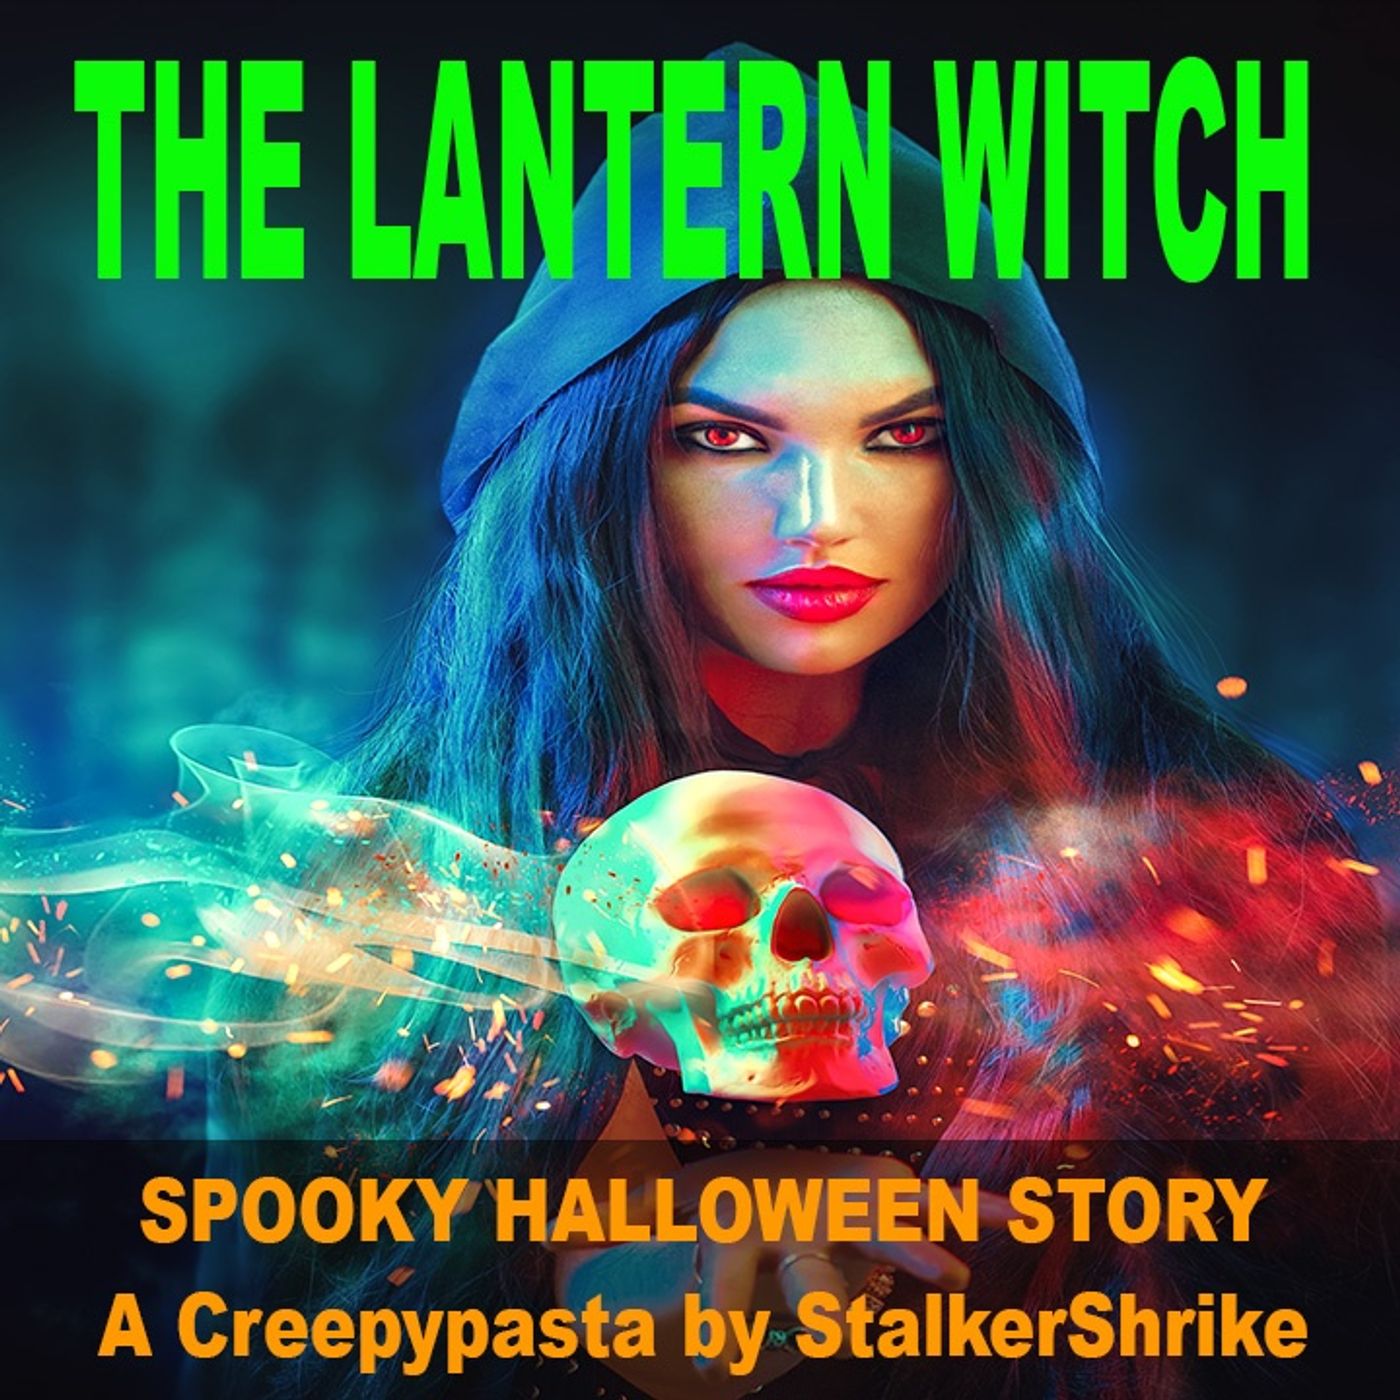 spooky-halloween-story-the-lantern-witch-a-creepyapsta-by